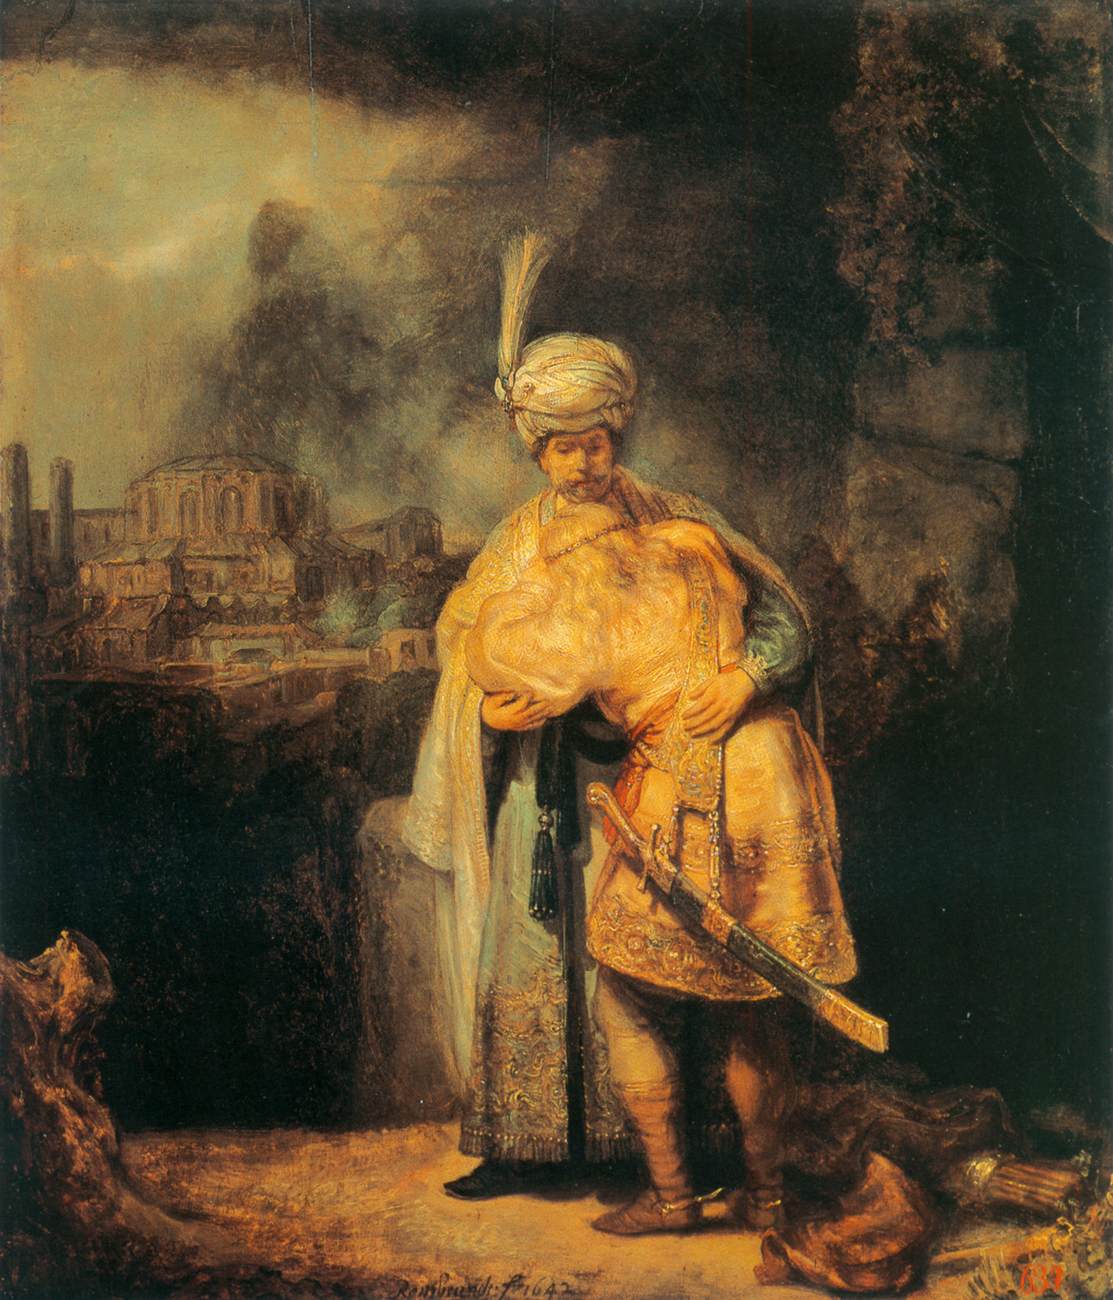 Biblical Scene by Rembrandt